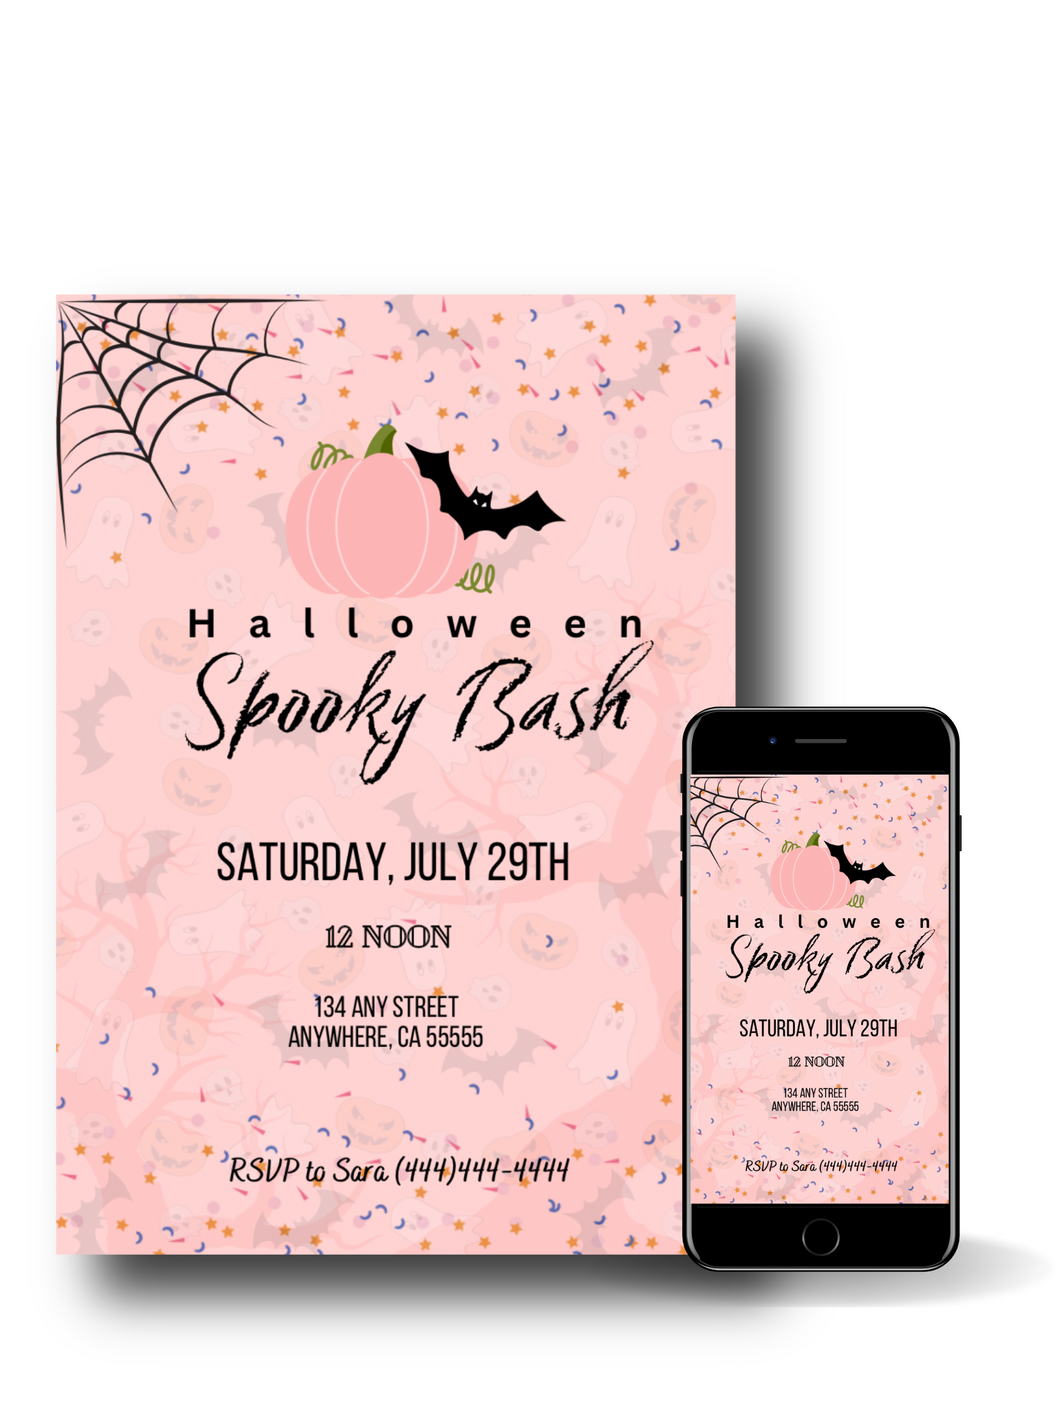 Editable Digital Download: Halloween Pink Party Invitation